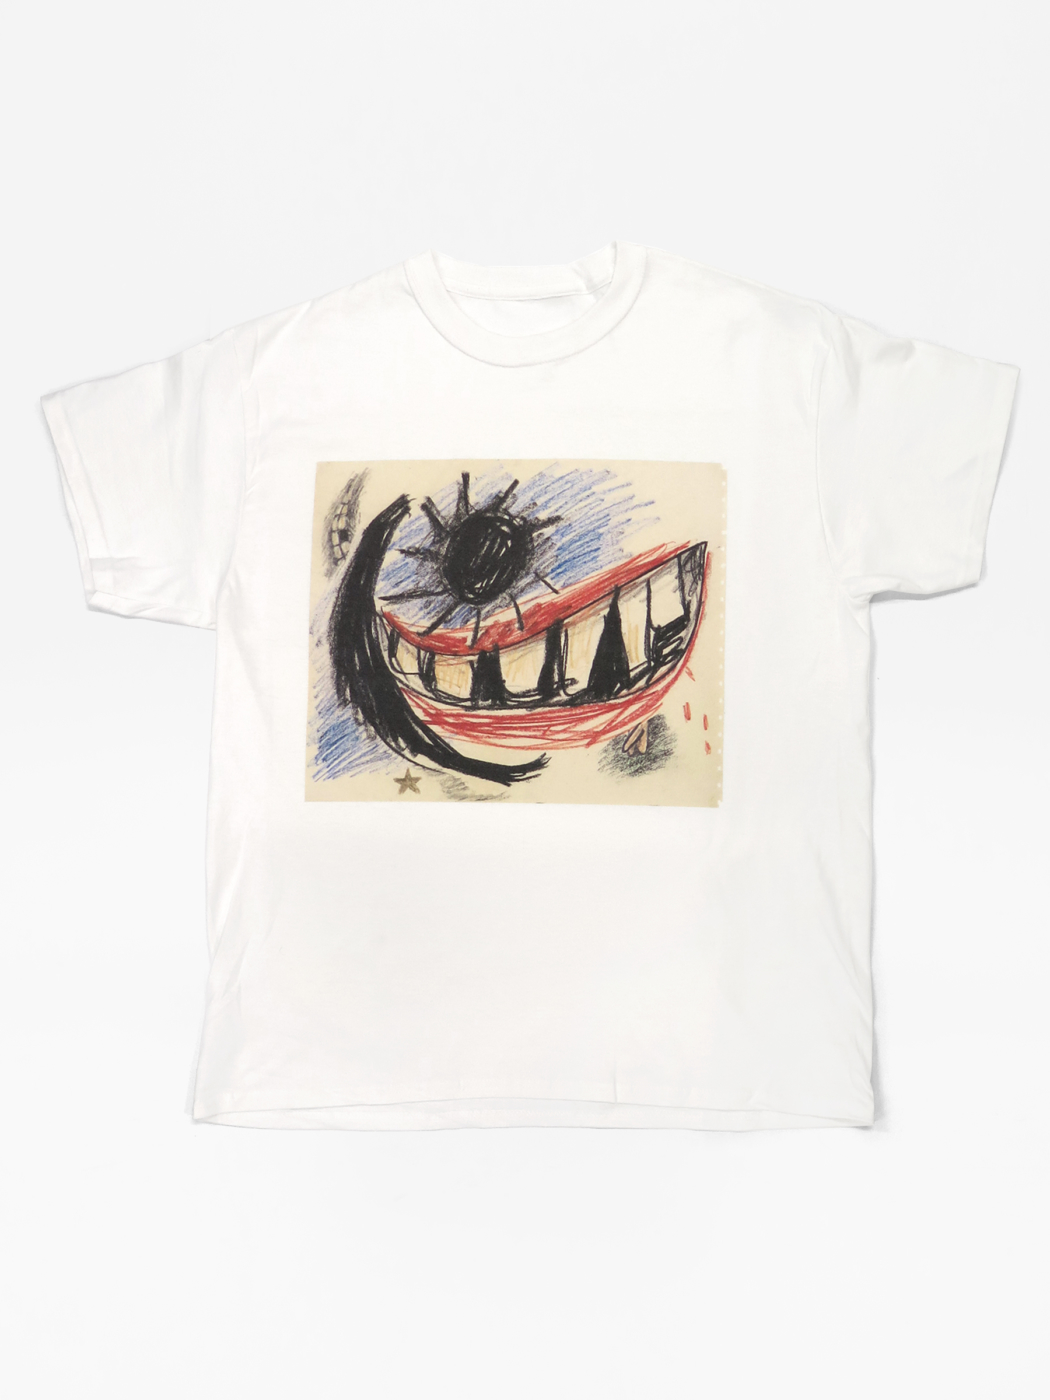 Lee Lozano T-Shirt (Smile)